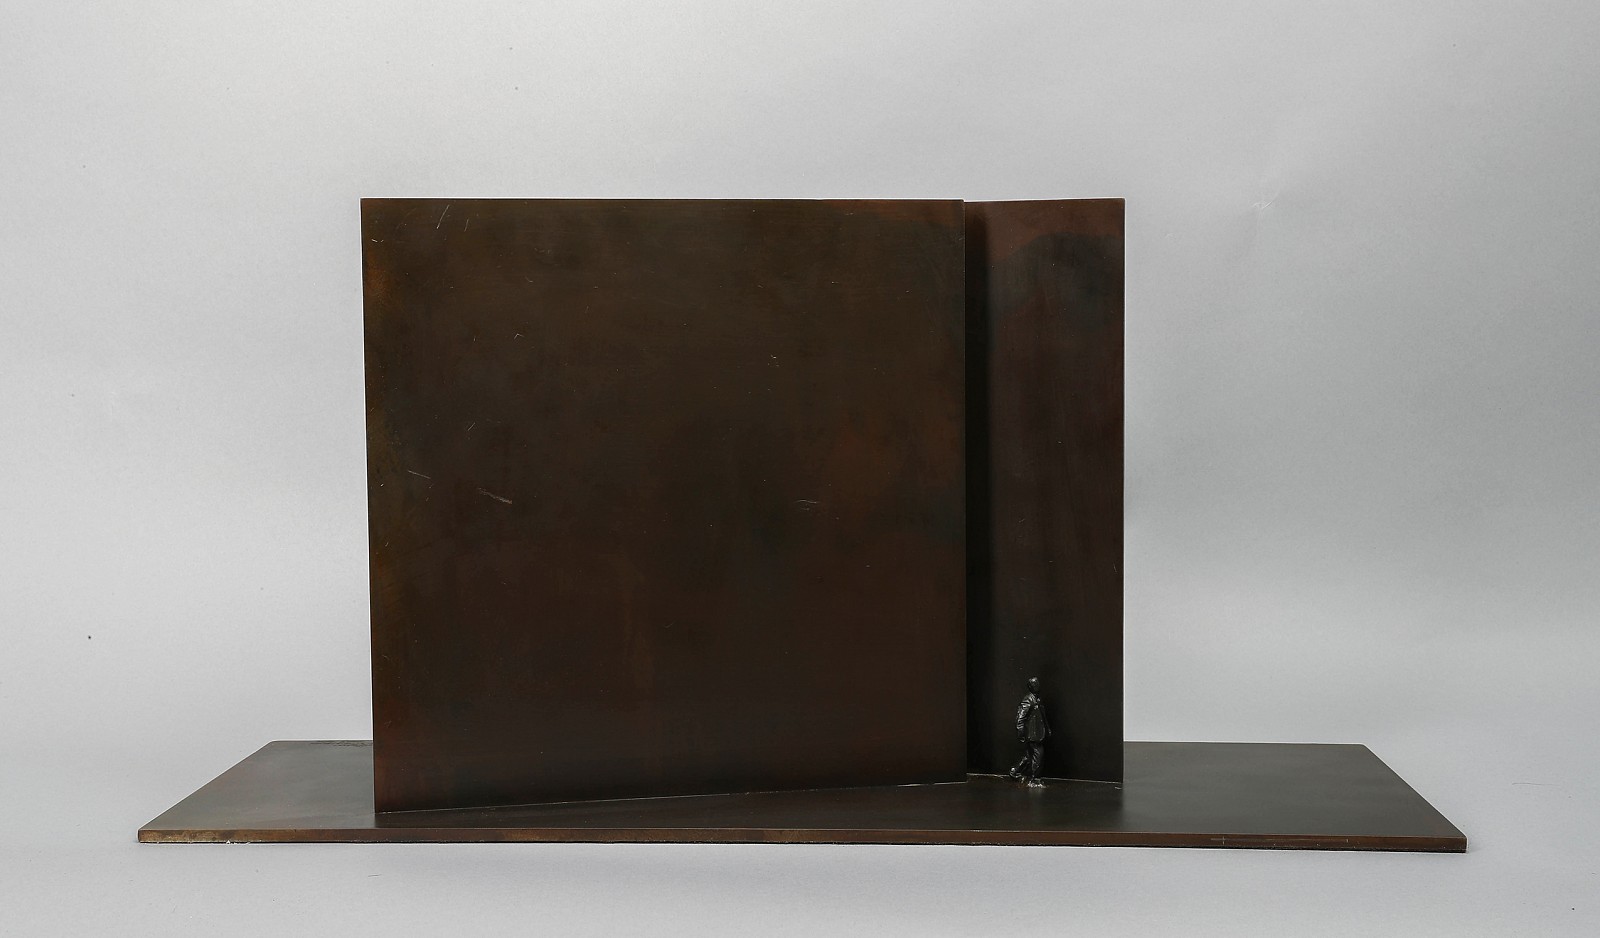 Jim Rennert, Breakthrough, Edition of 7, 2007
bronze and steel, 12 x 25 x 8 in. (30.5 x 63.5 x 20.3 cm)
JR031207